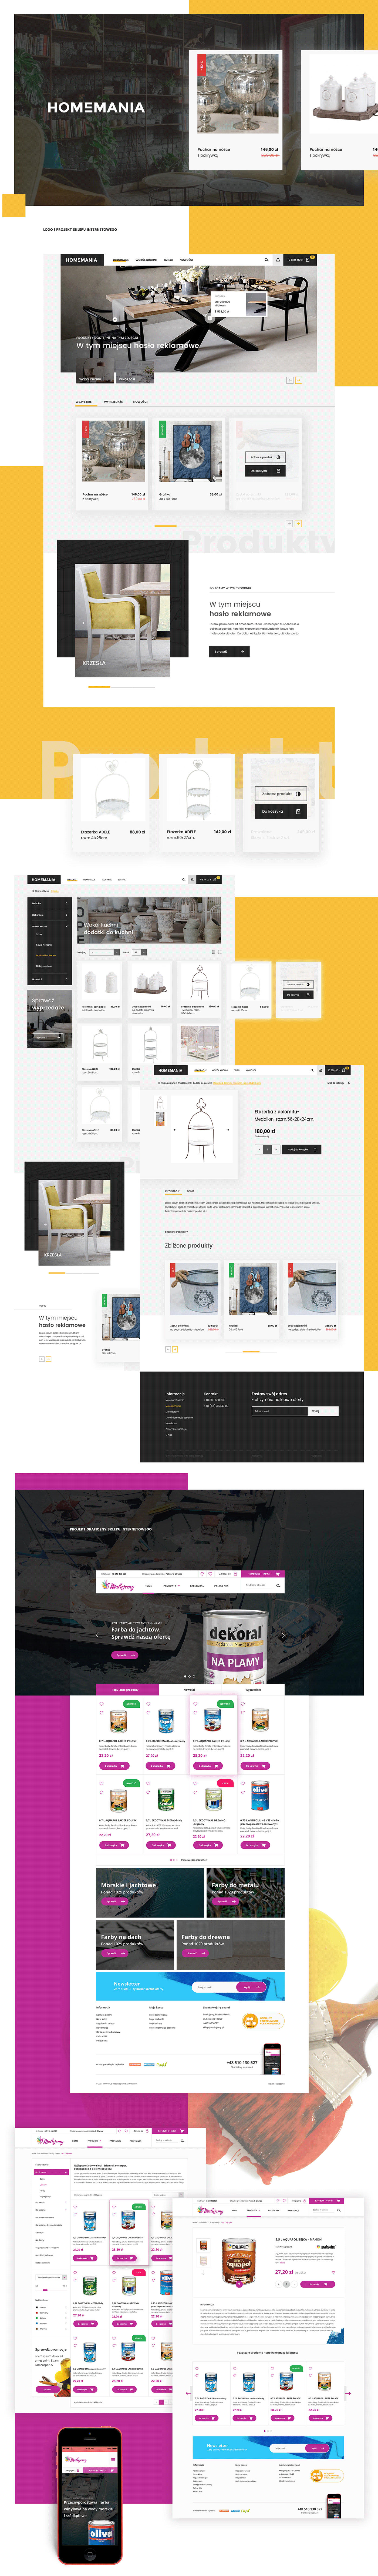 e-commerce shop shop online homepage desktop design